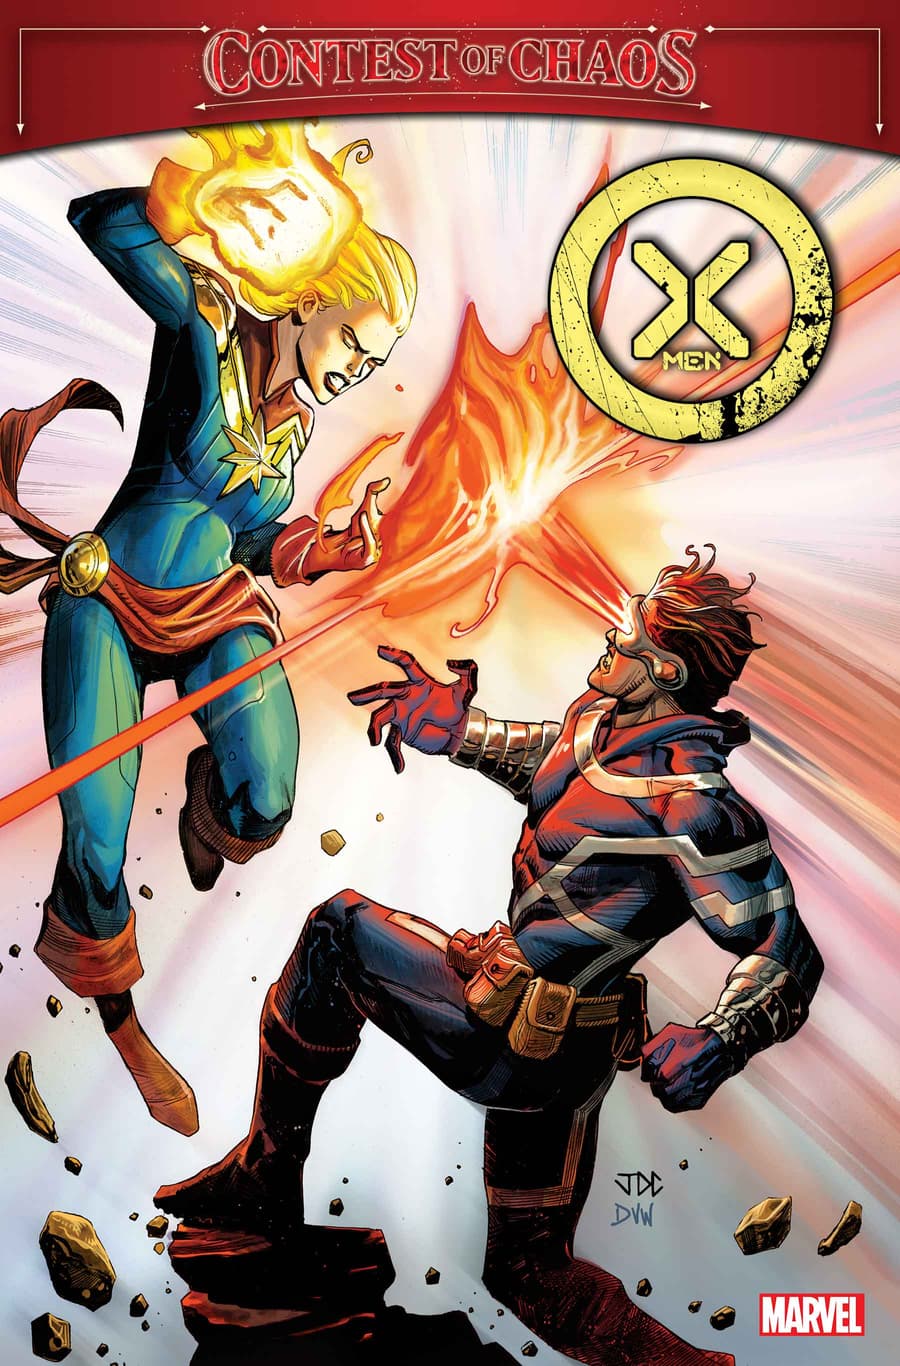 X-MEN ANNUAL #1 cover by Joshua Cassara